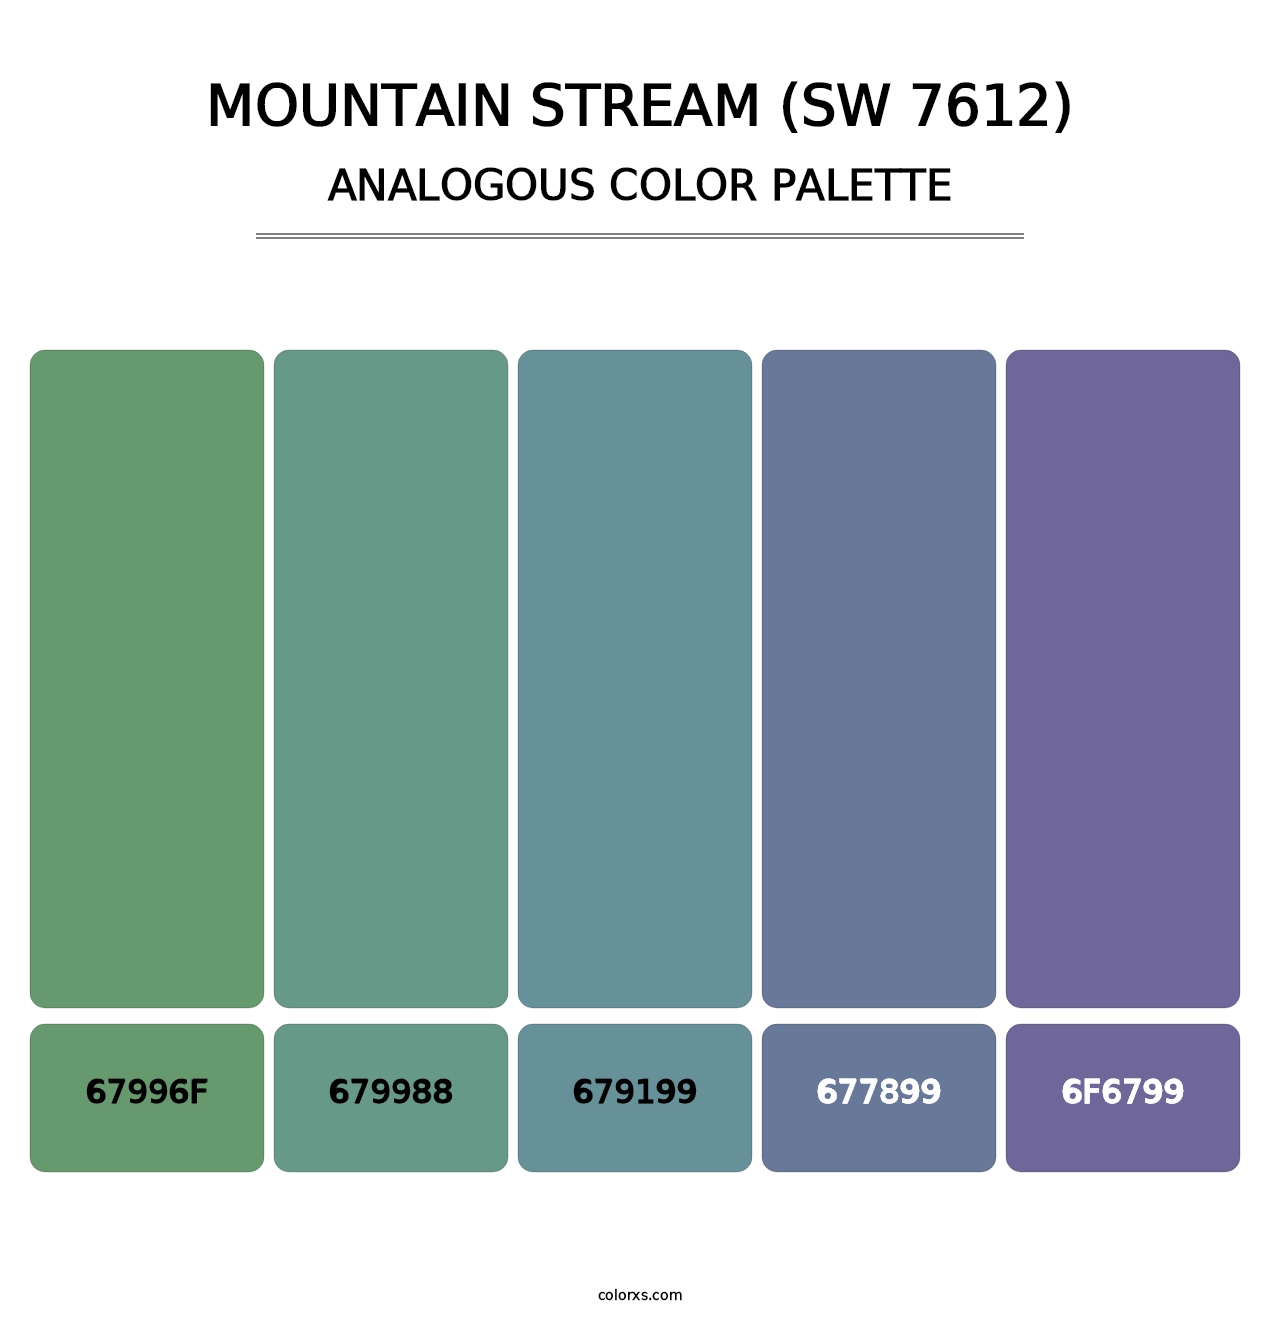 Mountain Stream (SW 7612) - Analogous Color Palette